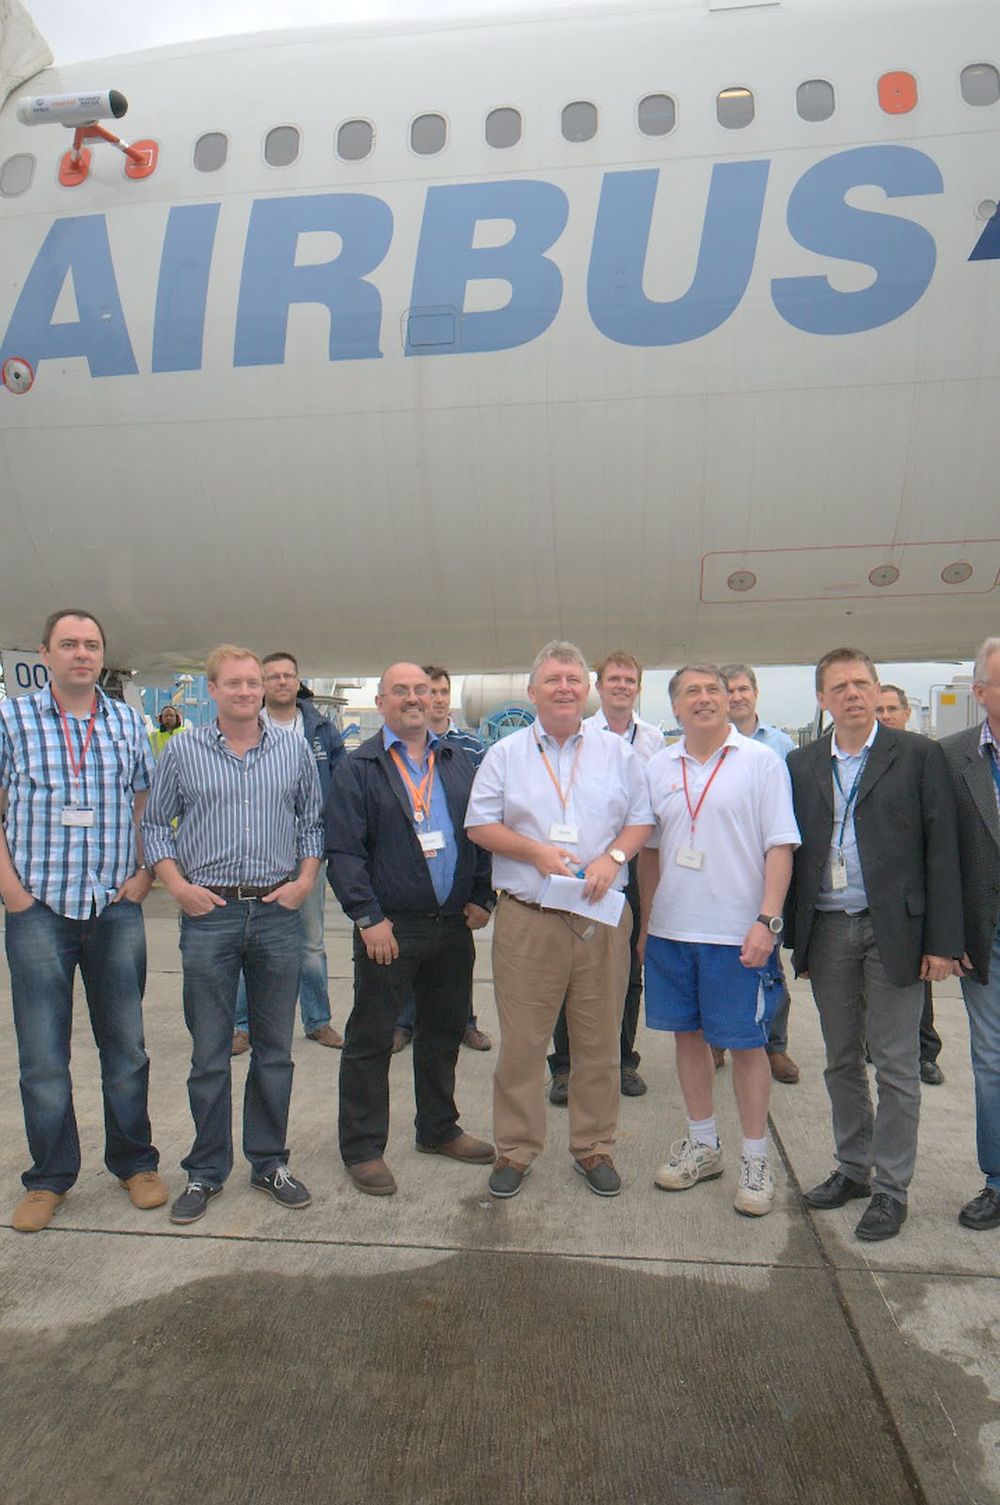 Testteamet er klar til avgang. Foran fra venstre: David Moriano Garcia, Nicarnica Aviation, Hugh Mc Collelougue, Airbus, Ian Davies, Eeasyjet, Fred Prata, Nilu, Jean Cammas og Manfred Birnfeld fra Airbus. 